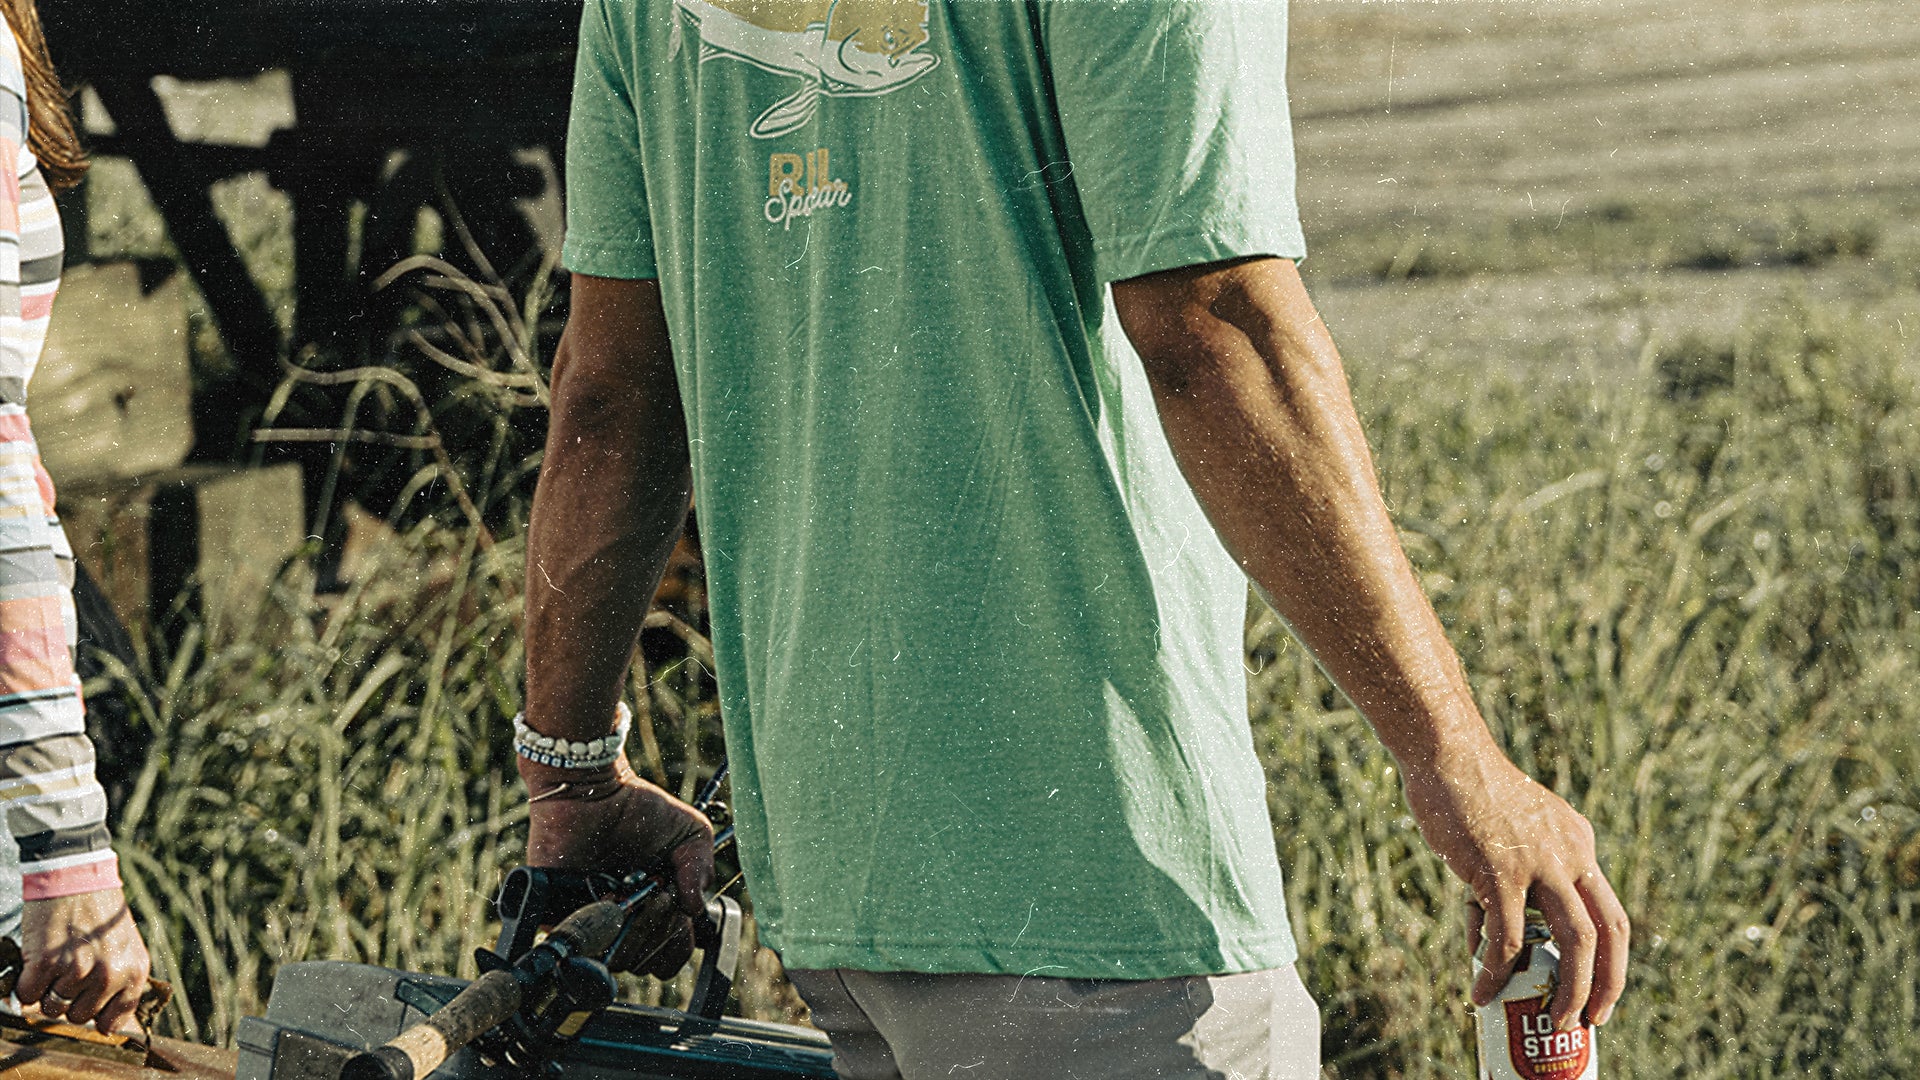 Long Sleeve Fishing Shirts UPF 50+  Reel Sportswear™ Tagged Performance